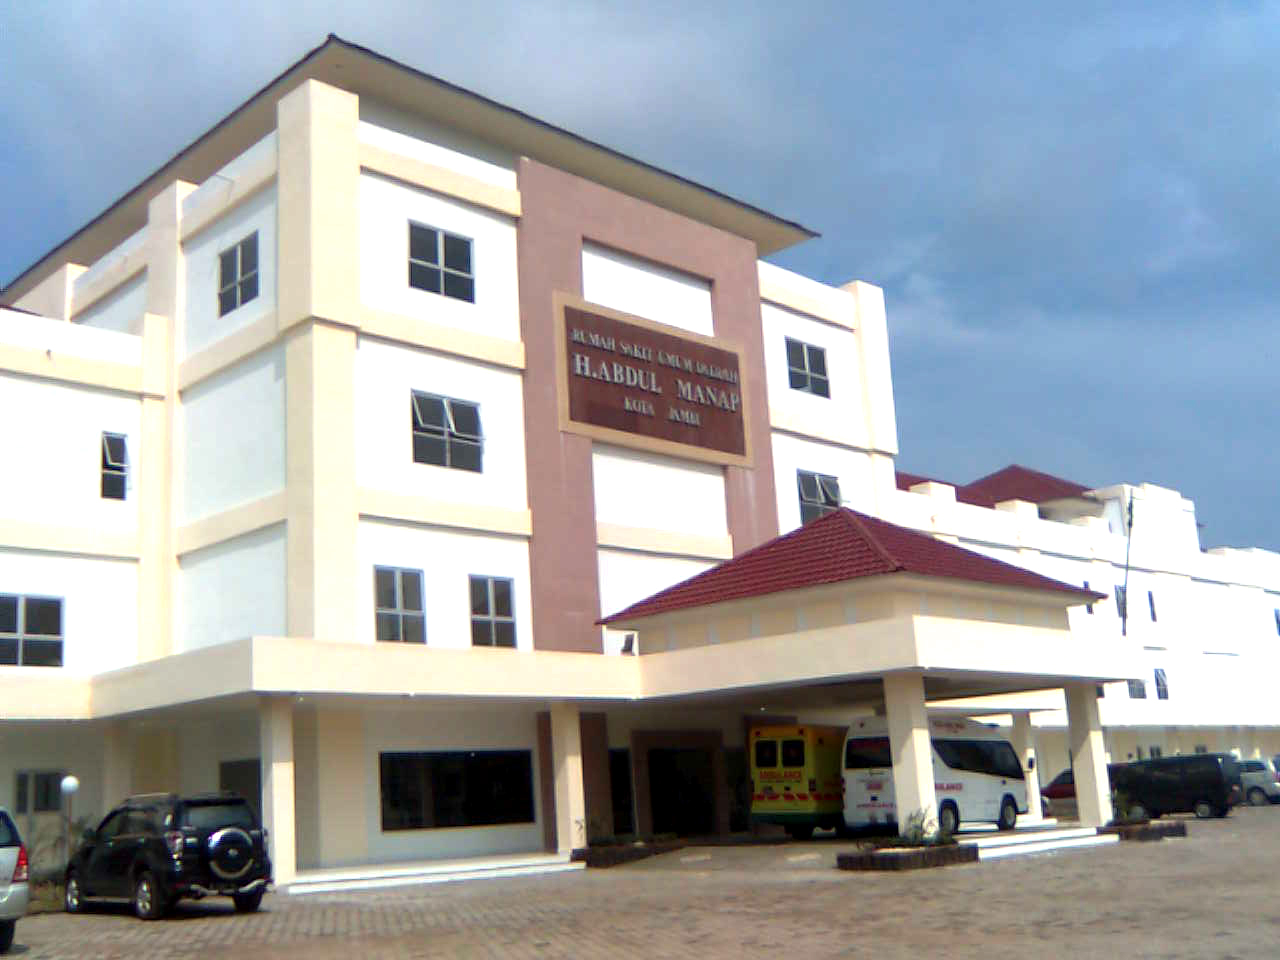  Gambar  Gambar  Rumah  Sakit  Islam Surabaya Desain  Rumah  Mesra